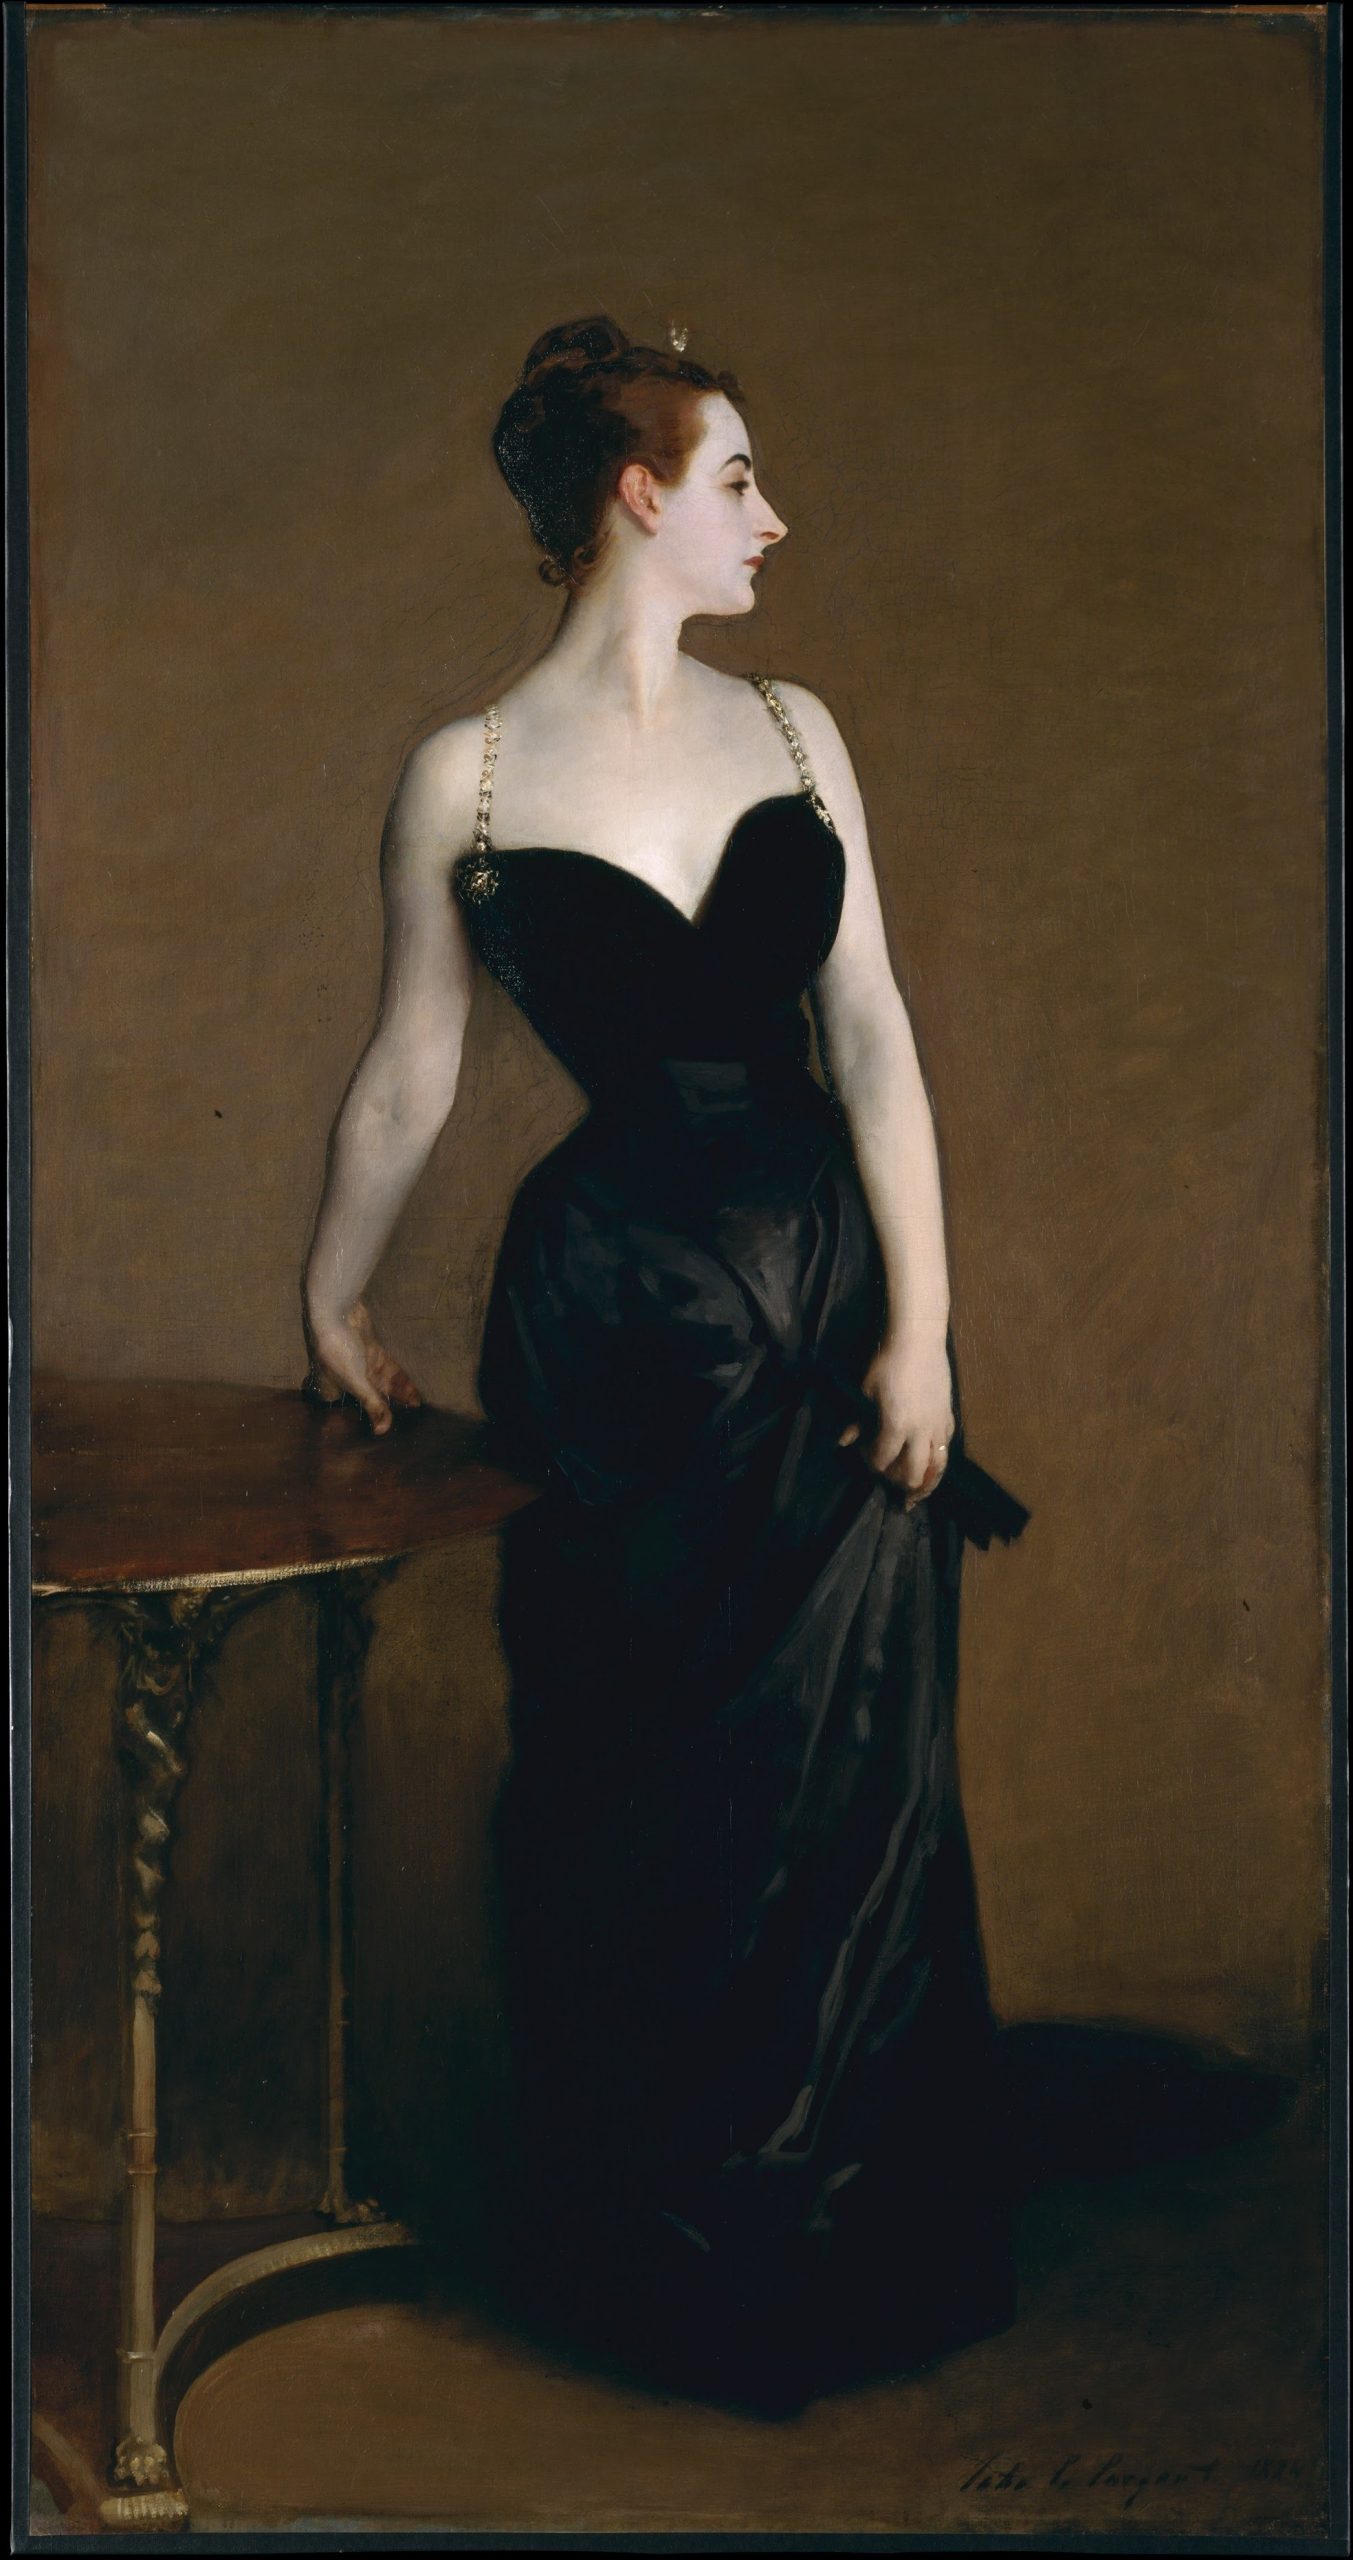 Madame X by the renown portraitist John Singer Sargent.